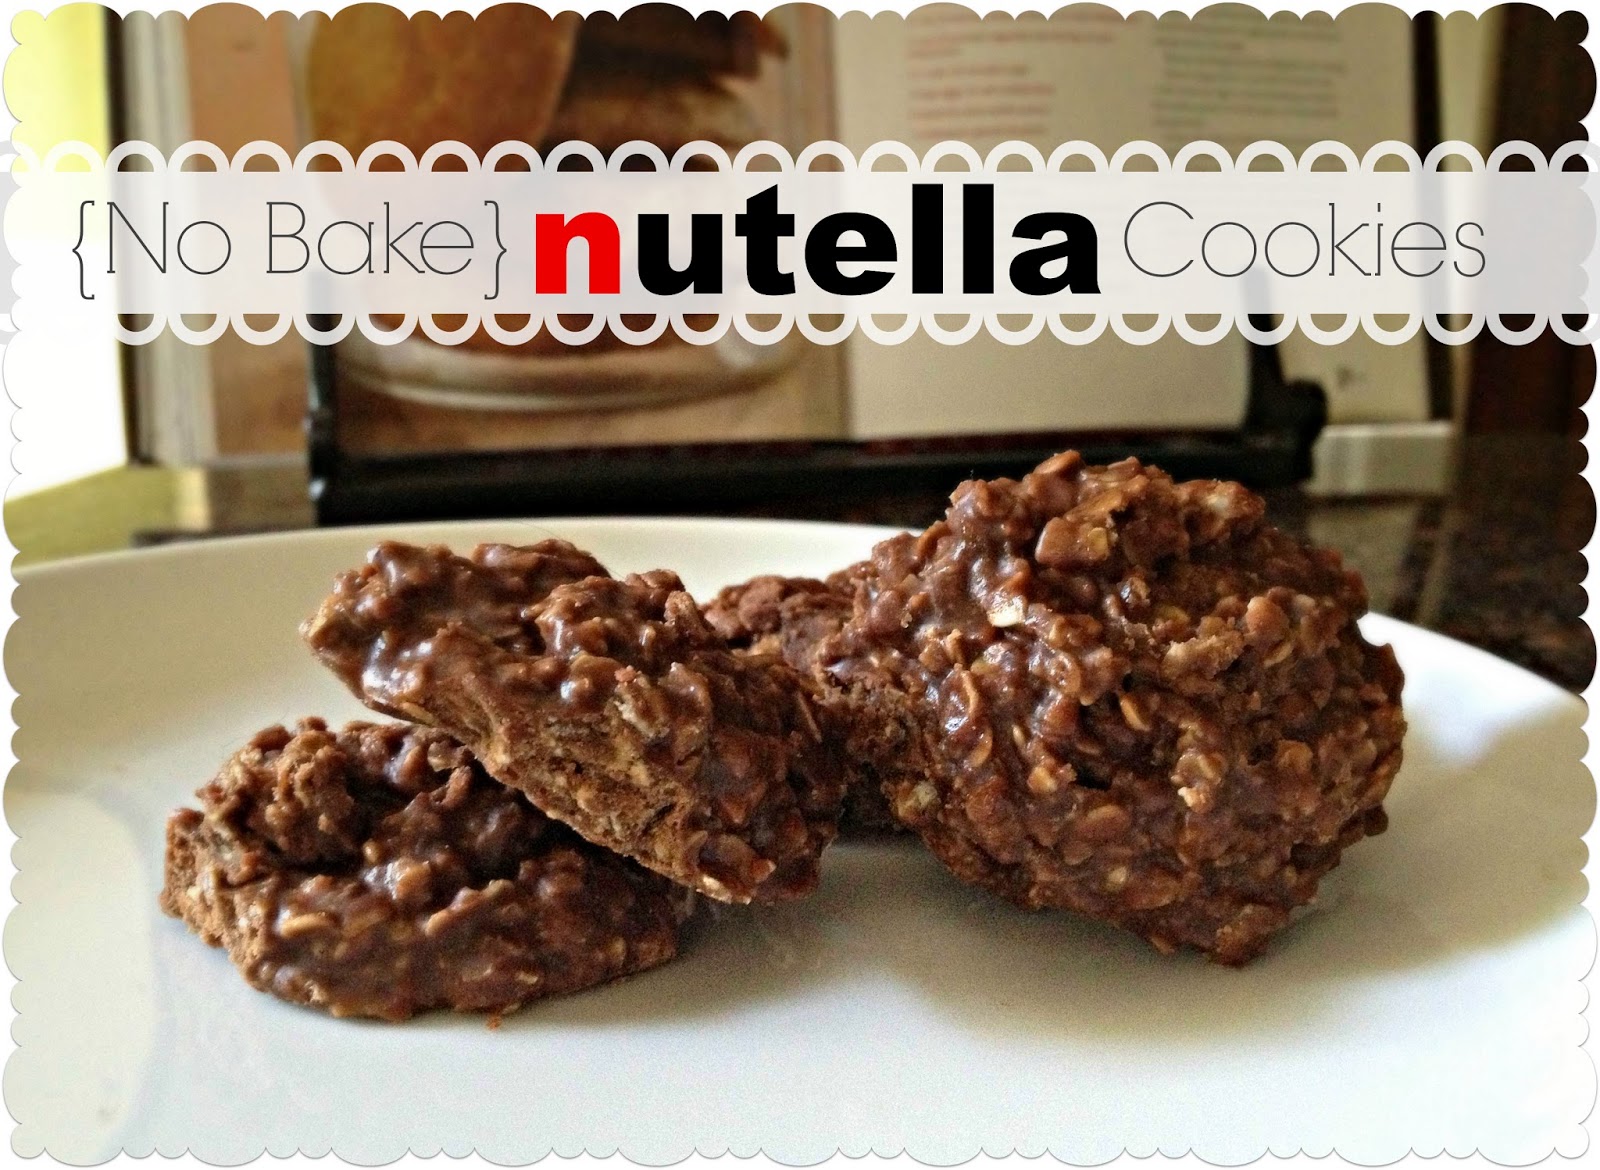 Life's Simple Measures: {No Bake} Nutella Cookies